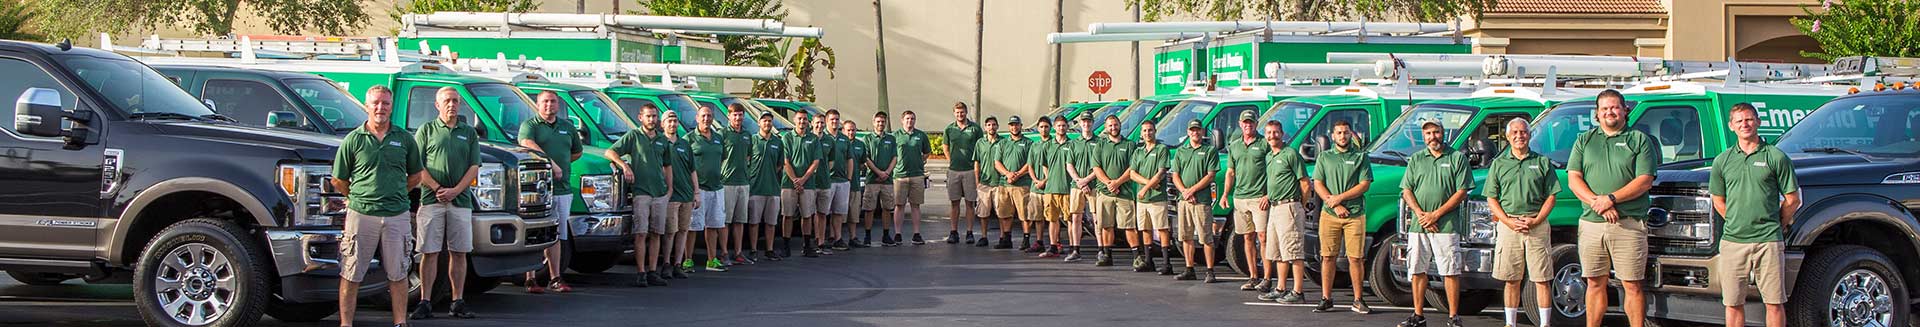 Local Orlando Plumber Staff and Trucks